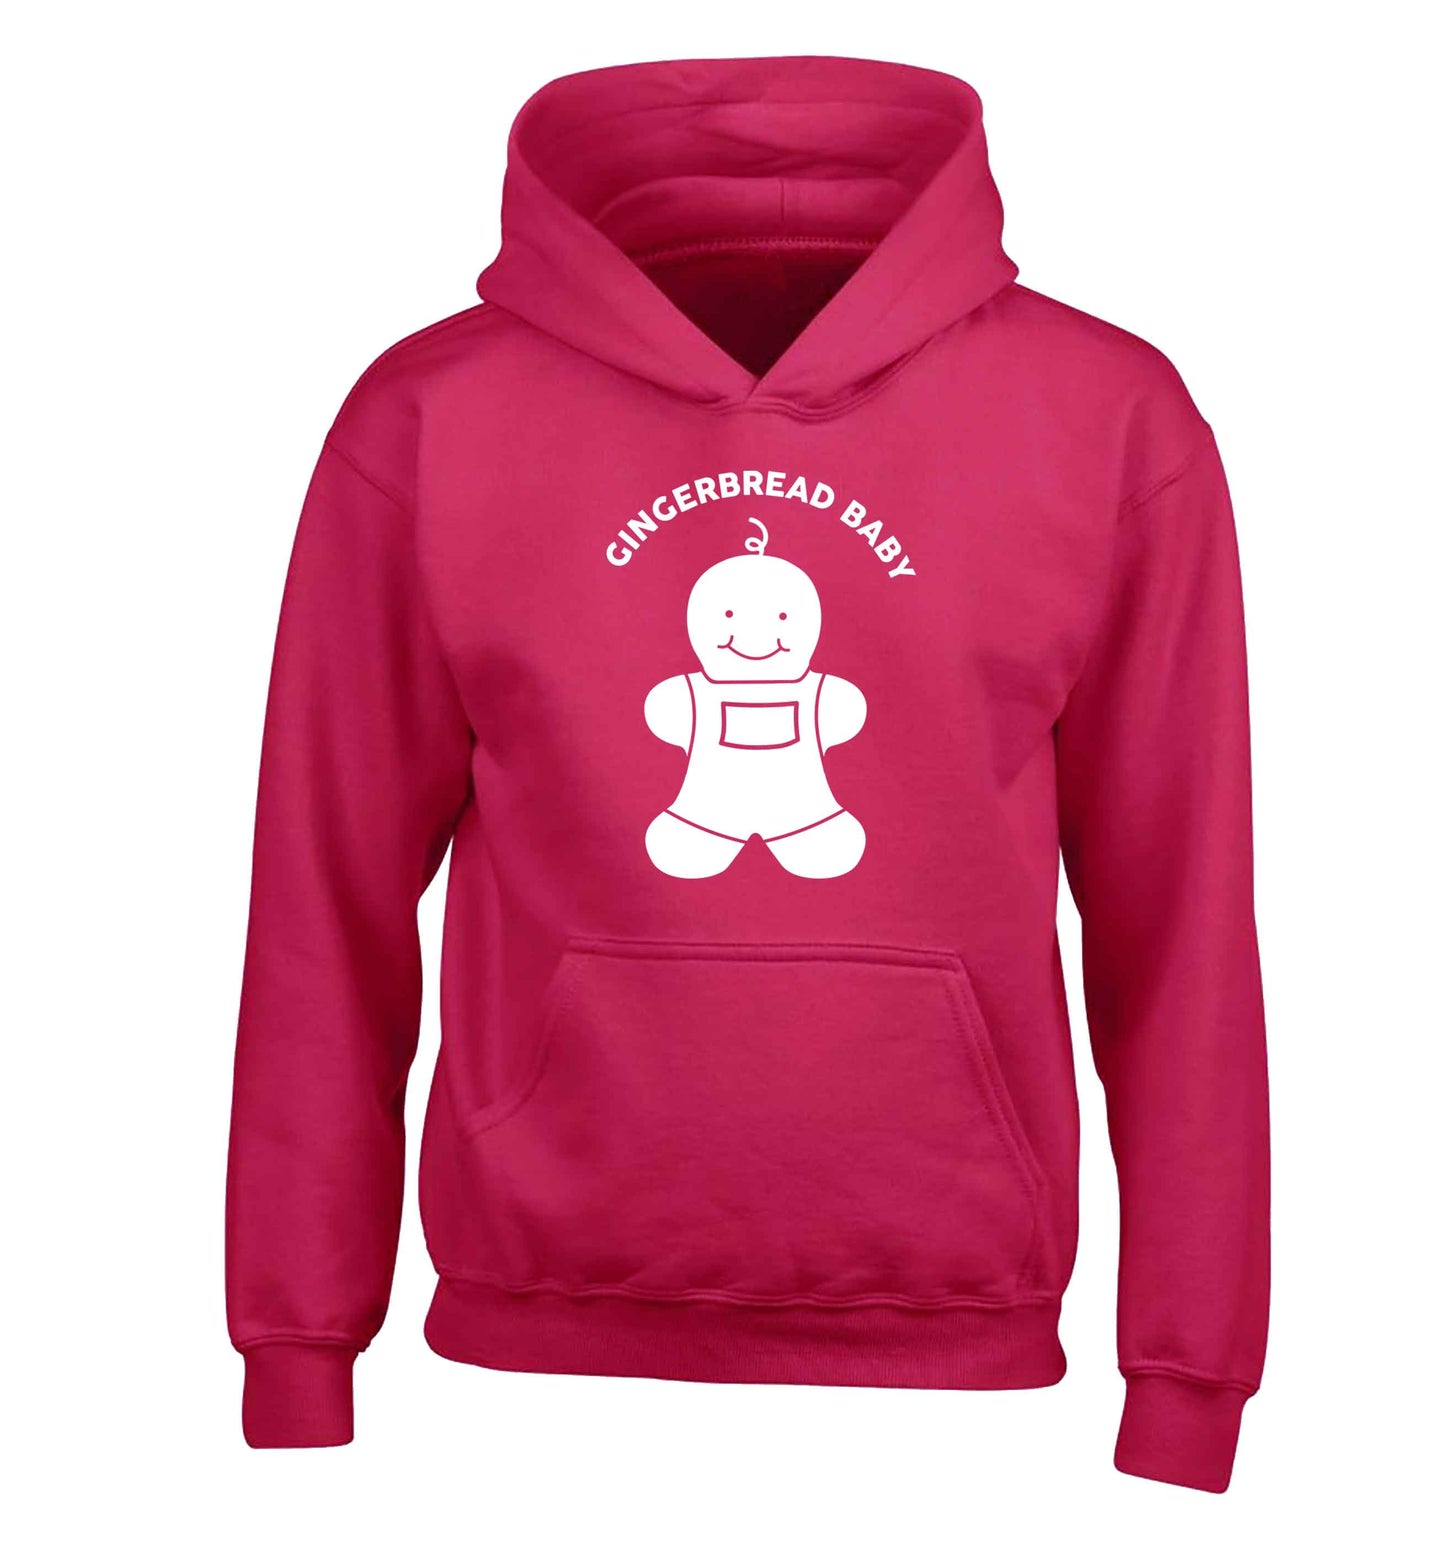 Gingerbread baby children's pink hoodie 12-13 Years